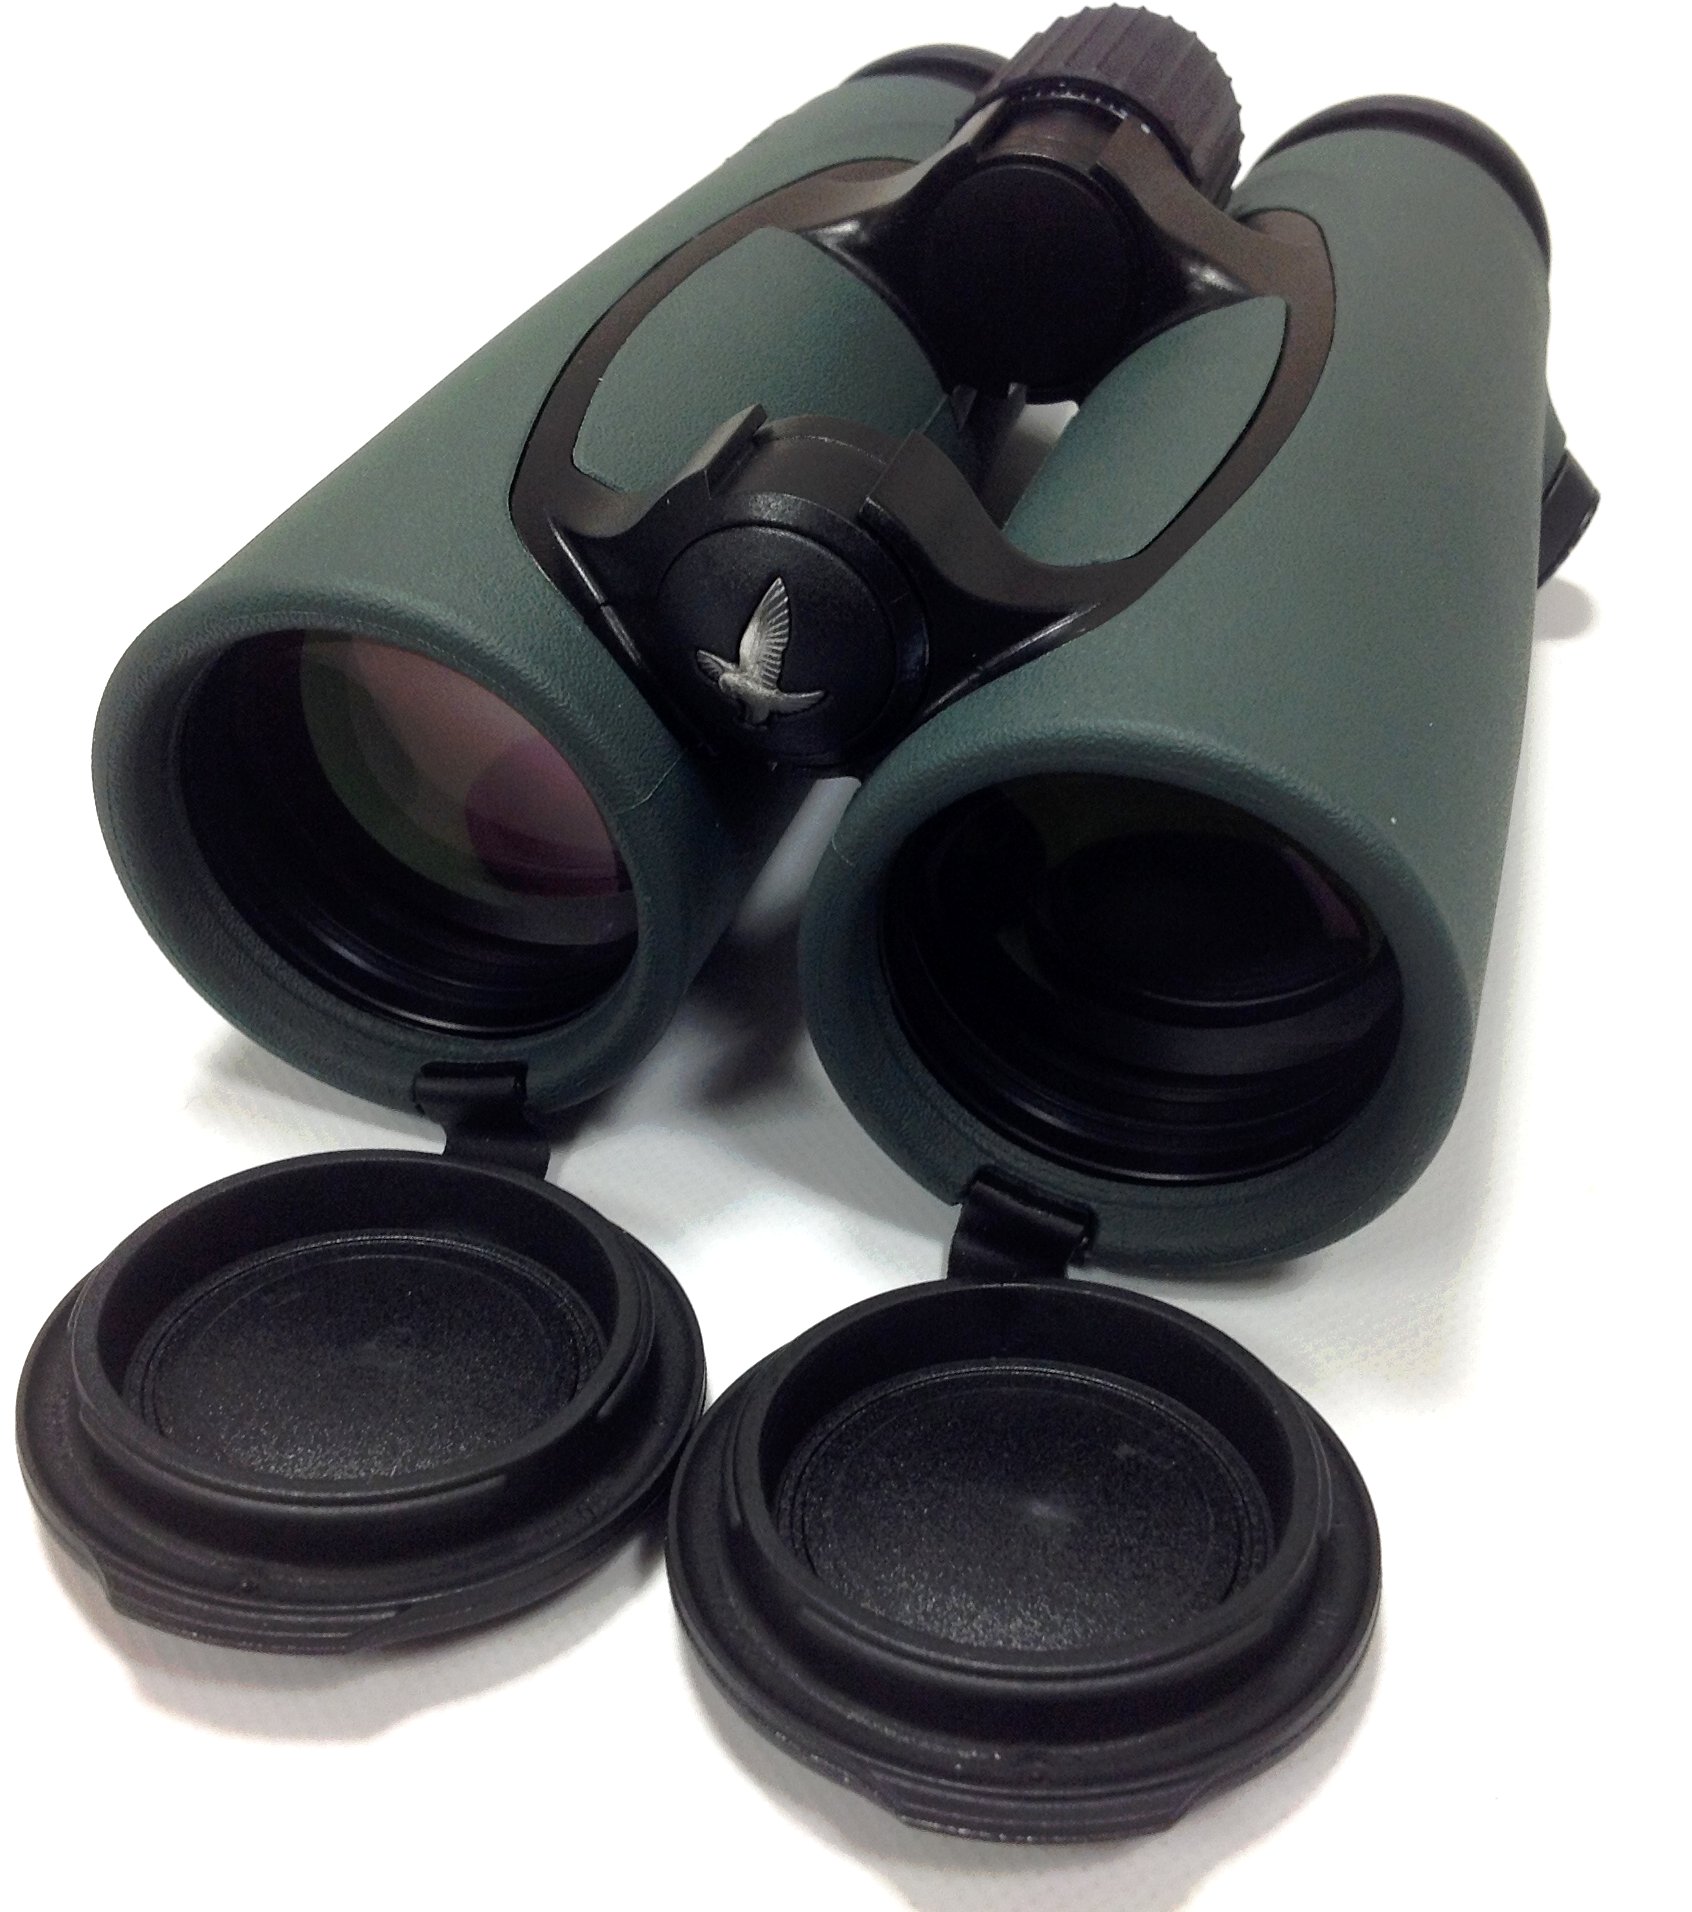 Swarovski 10x42 EL Binoculars